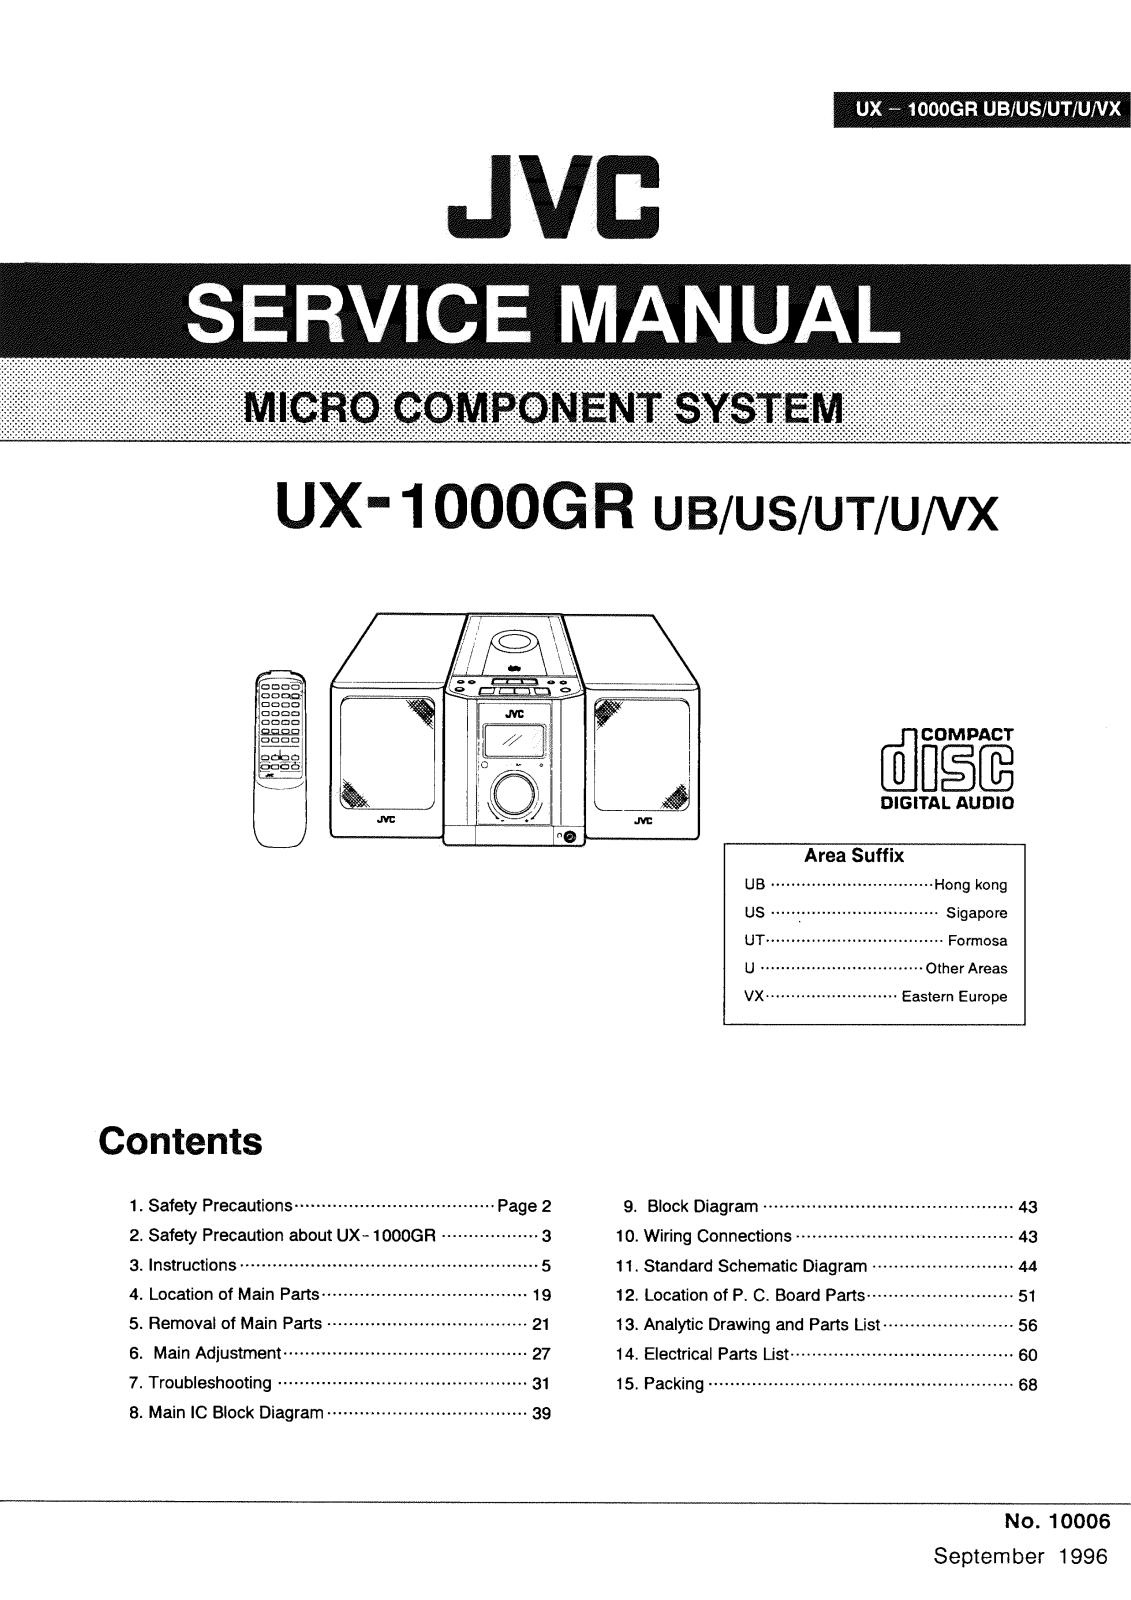 JVC UX-1000GR Service Manual